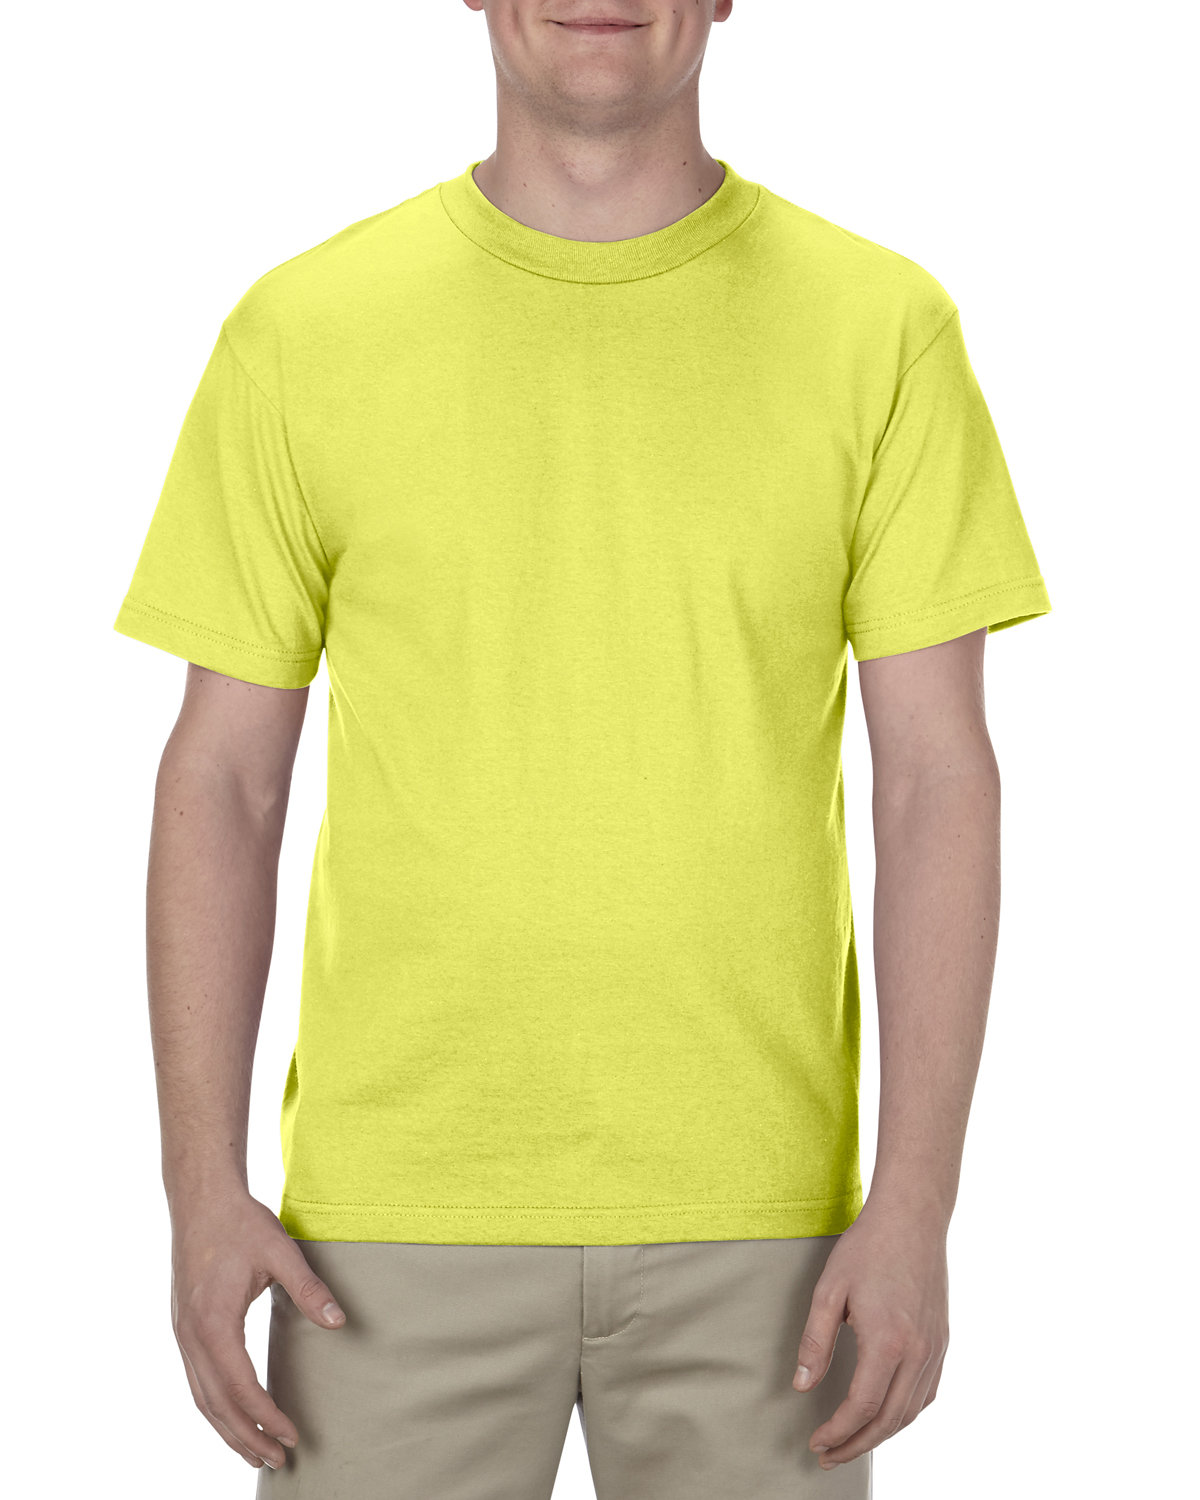 American Apparel Unisex Heavyweight Cotton T-Shirt safety green 